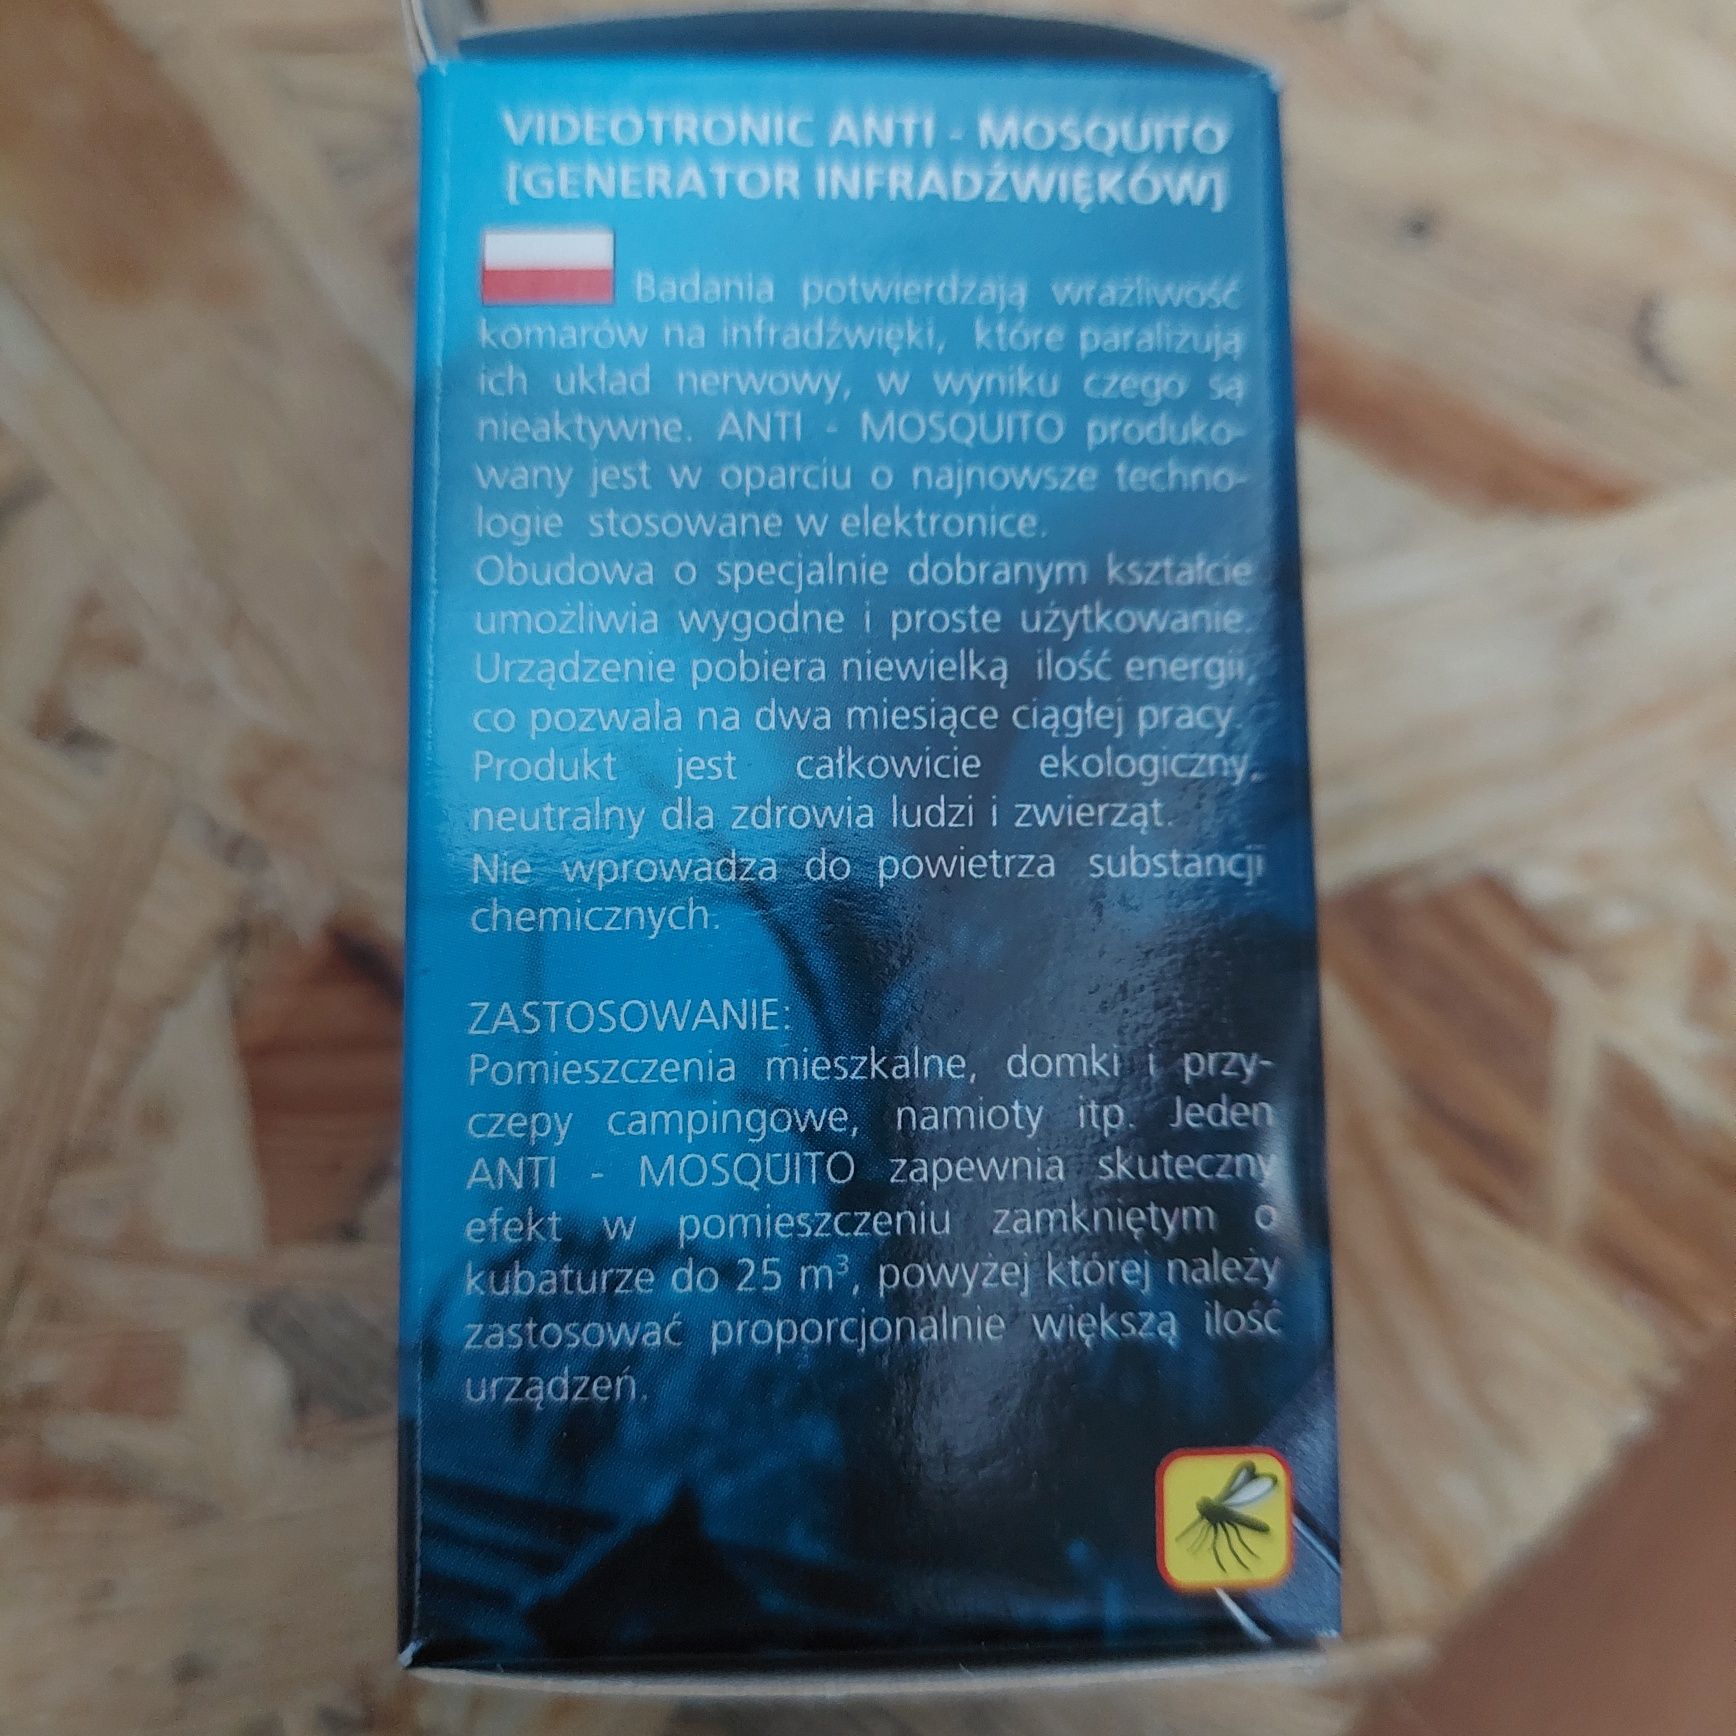 ANTI - Mosquito NA KOMARY firmy Videotronic